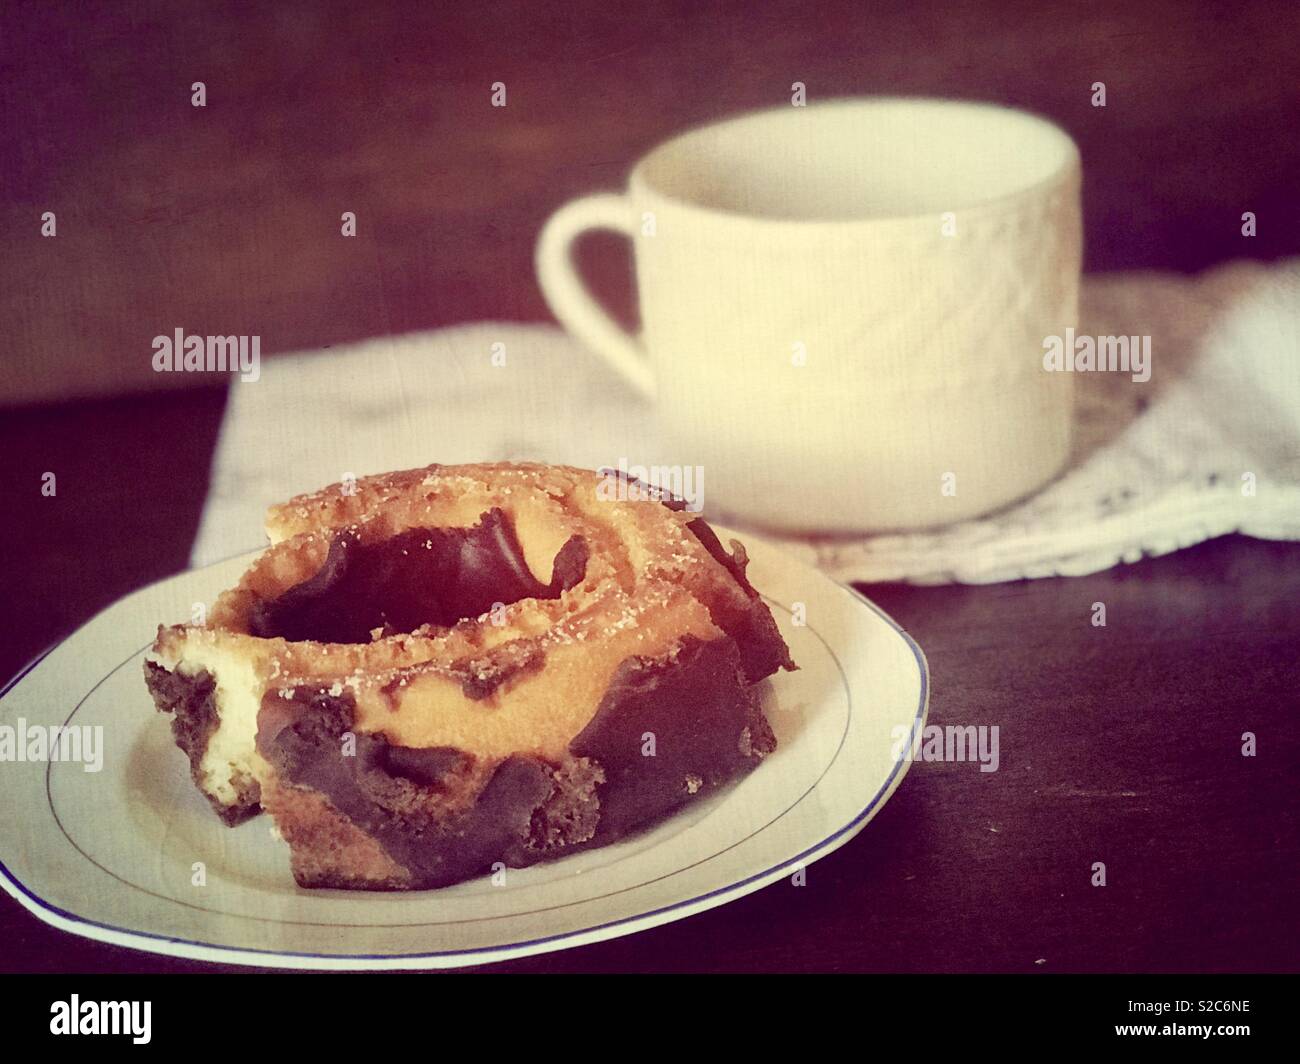 Coffee and chocolate crumble cake donut on fine china wear, America, USA Stock Photo